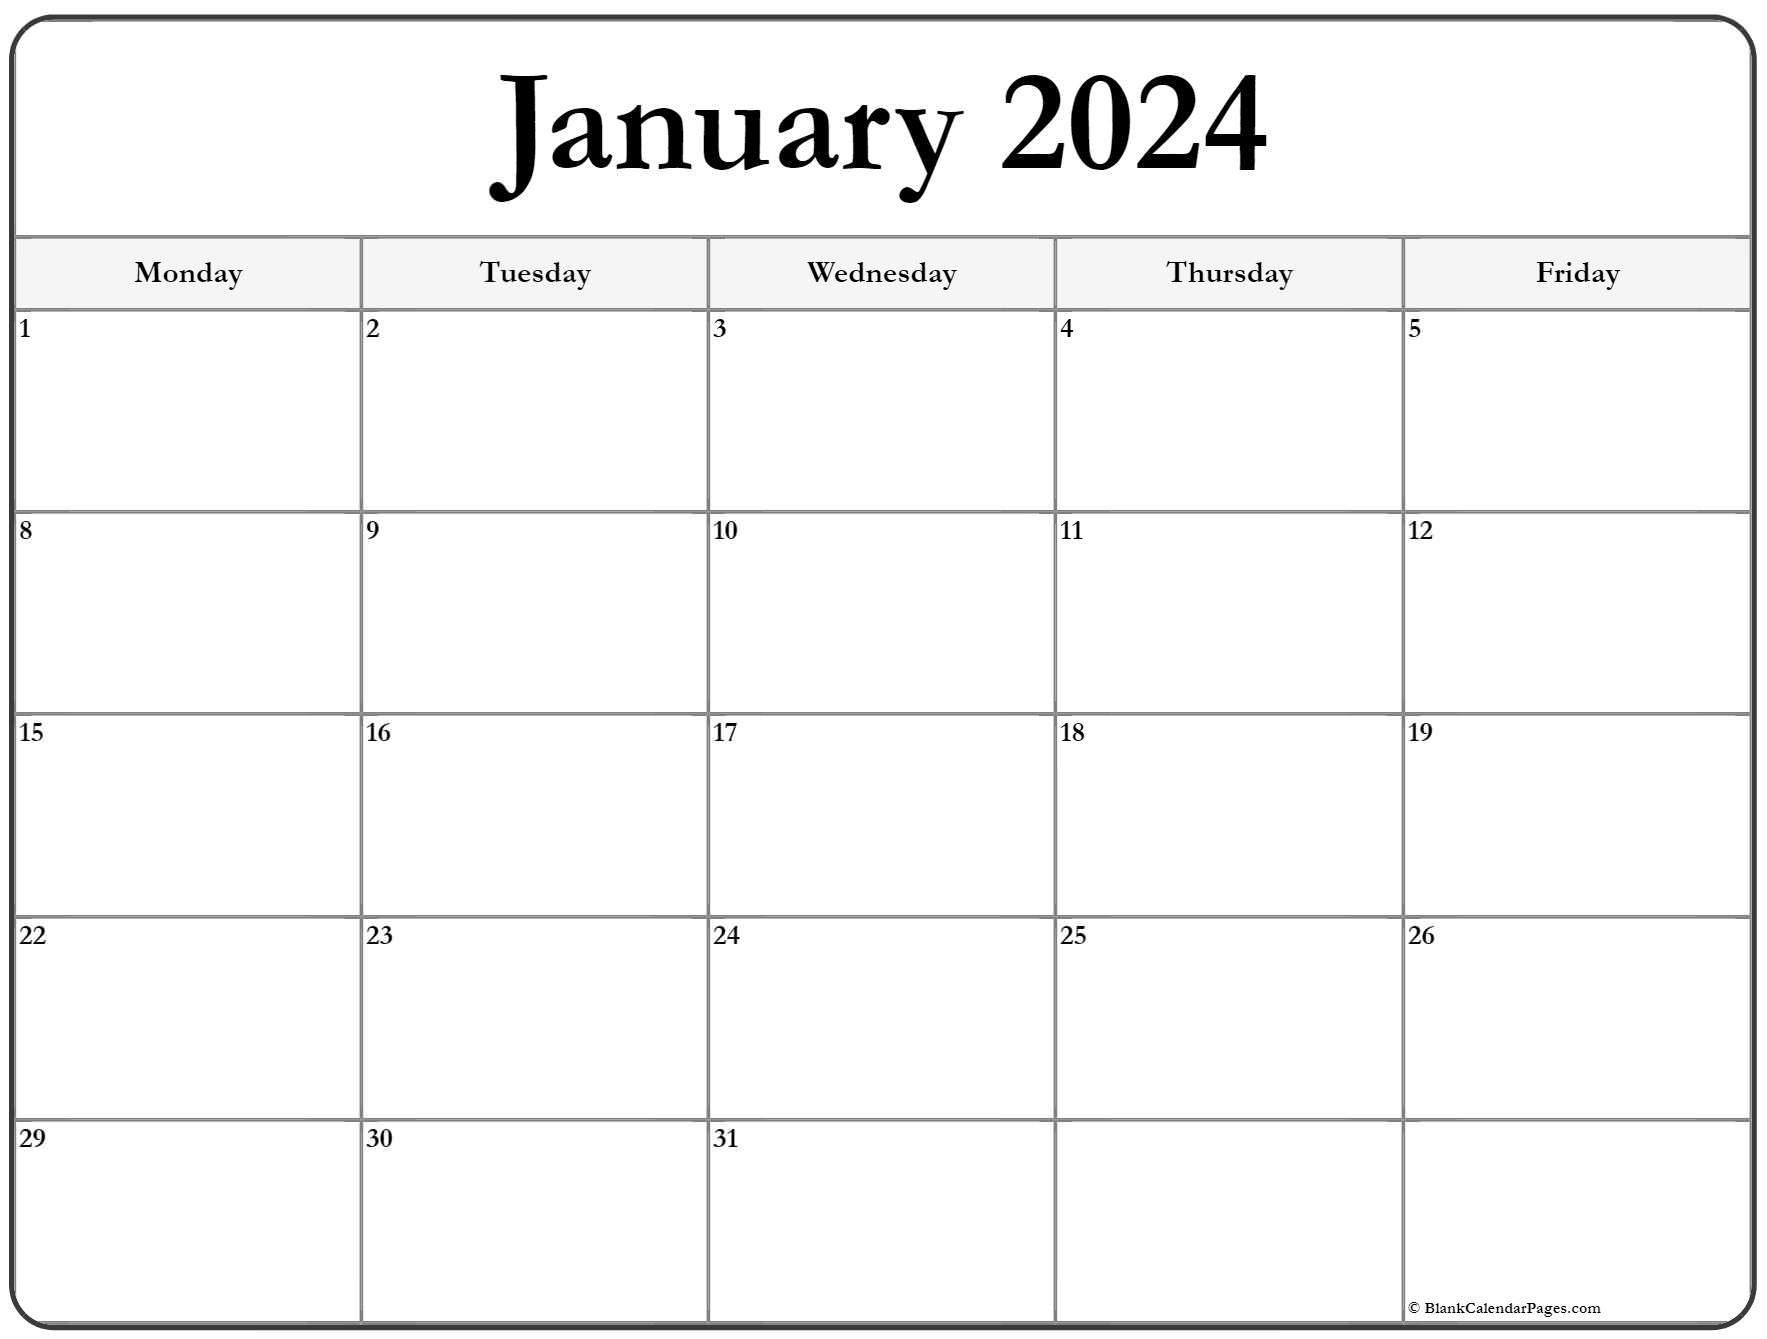 Good Friday 2024 Calendar Date Calendar 2024 All Holidays